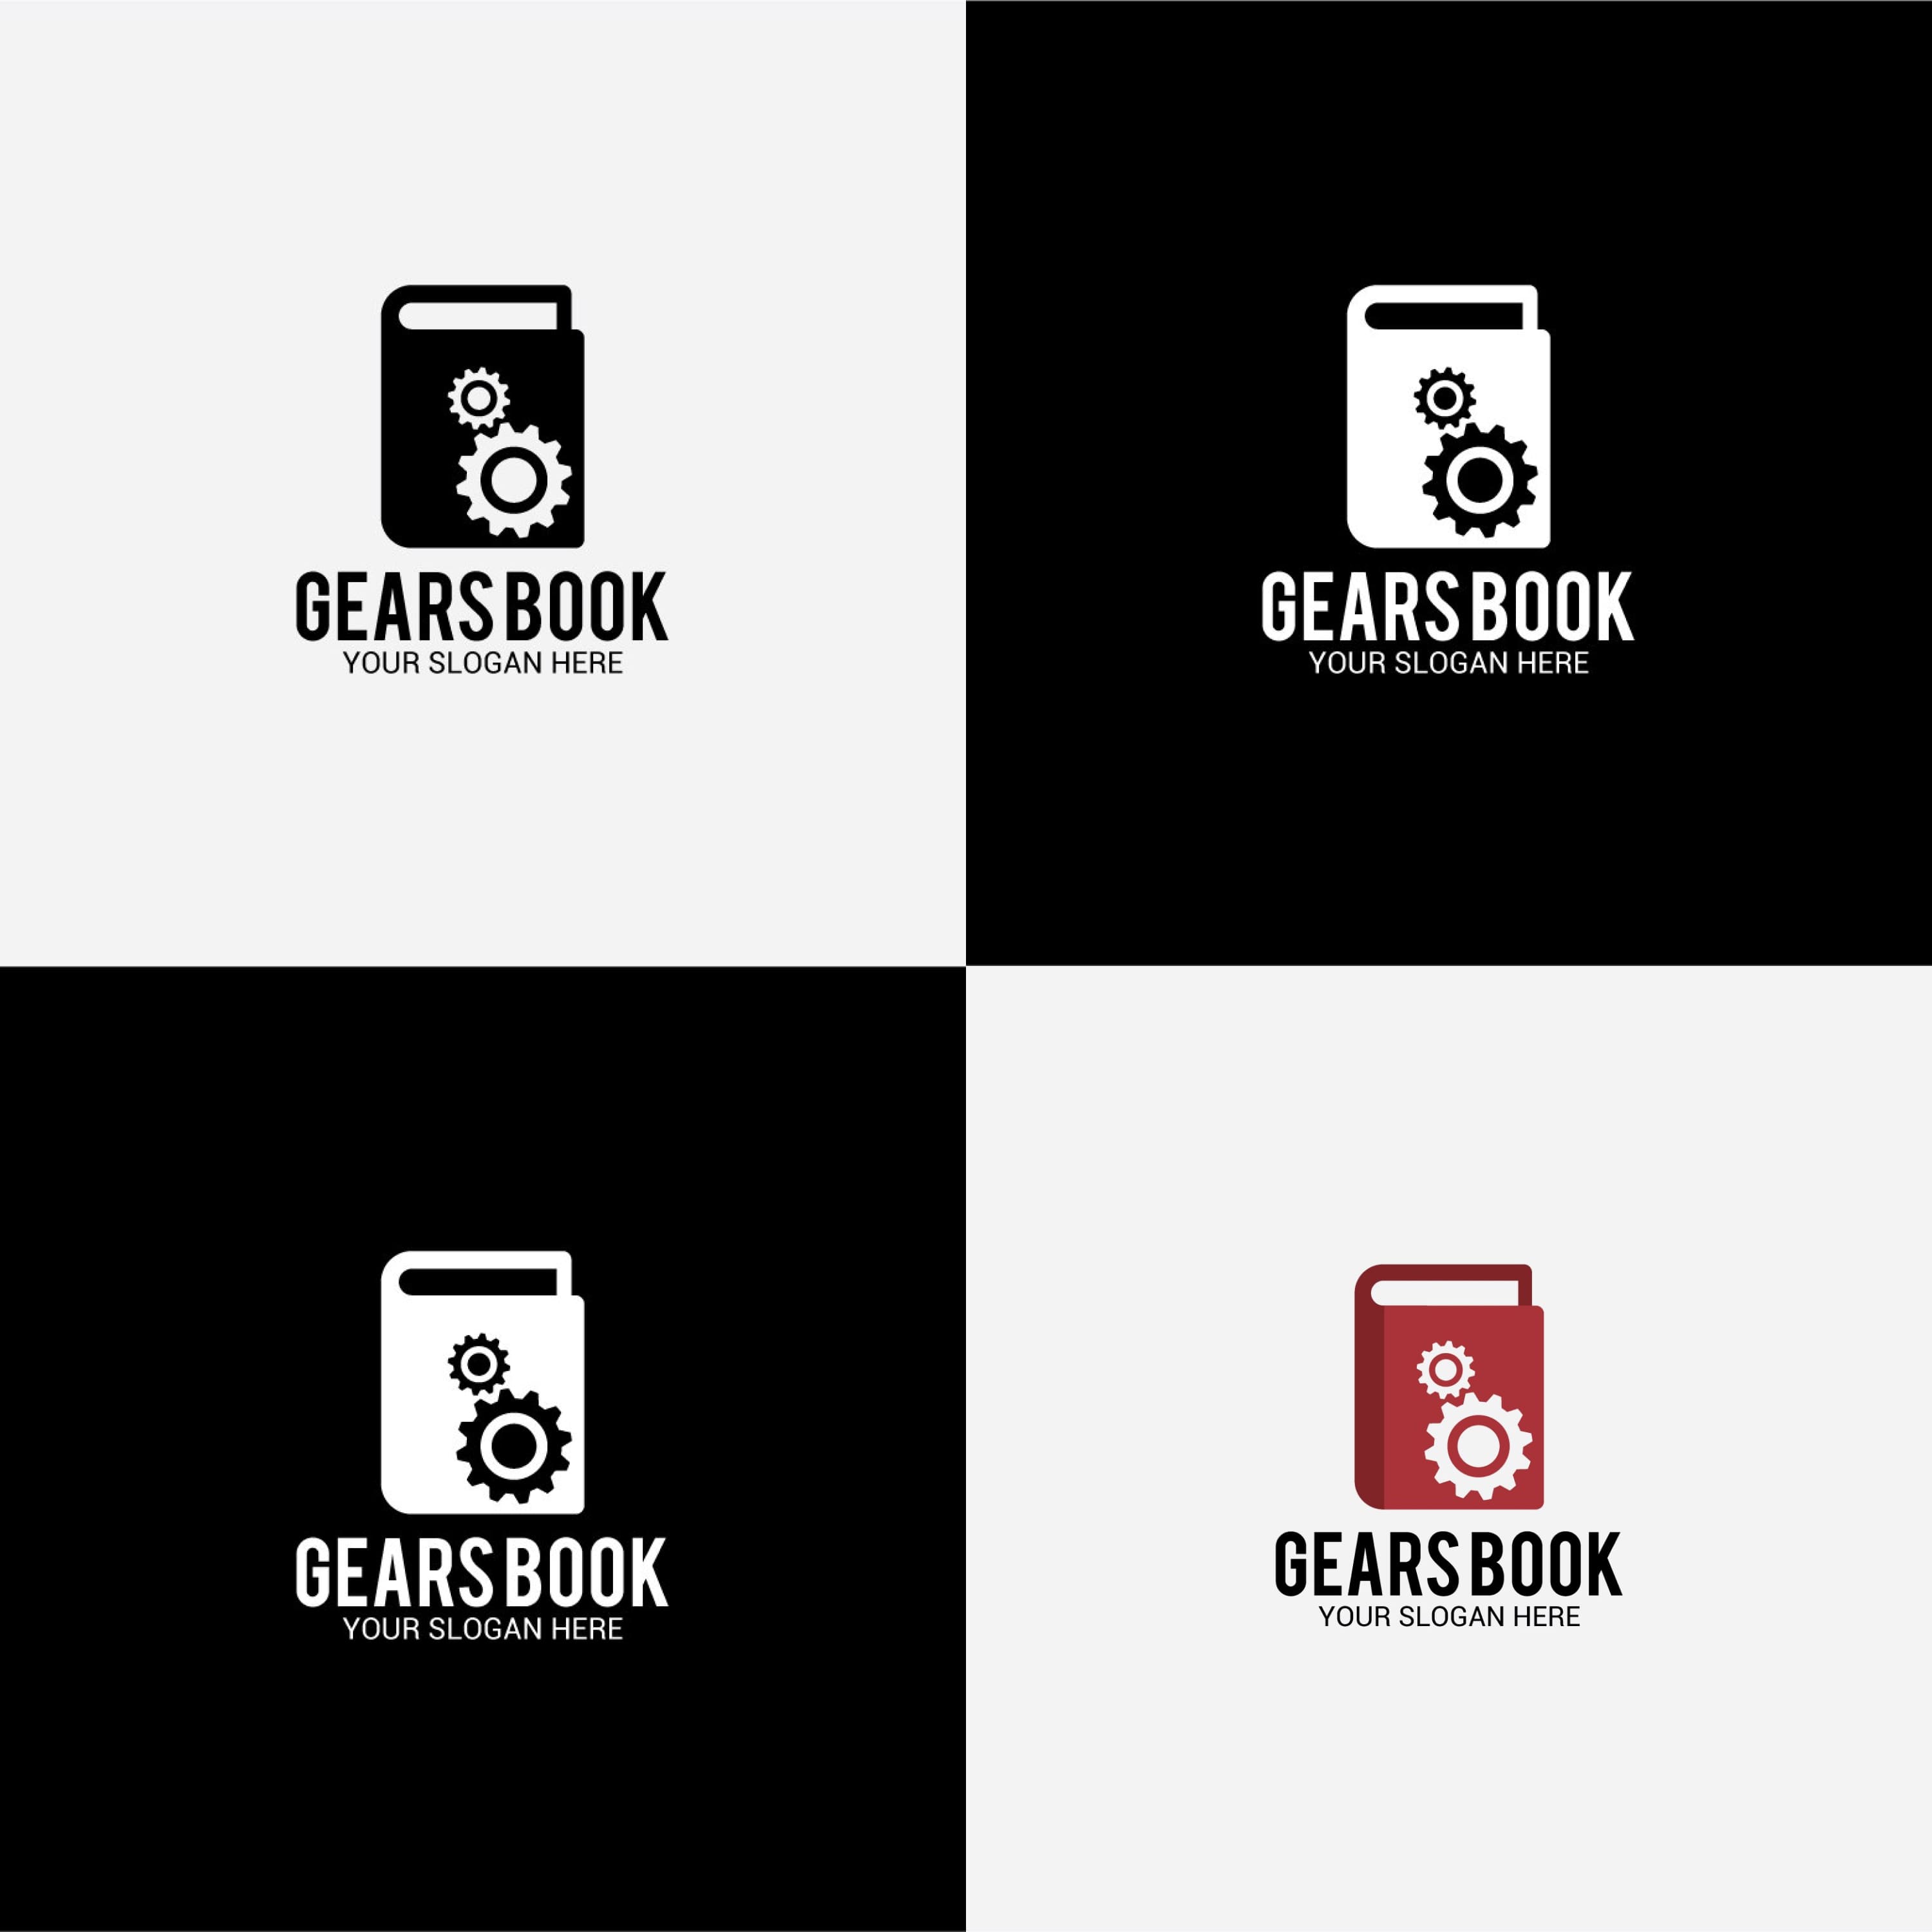 Gears book Logo cover.